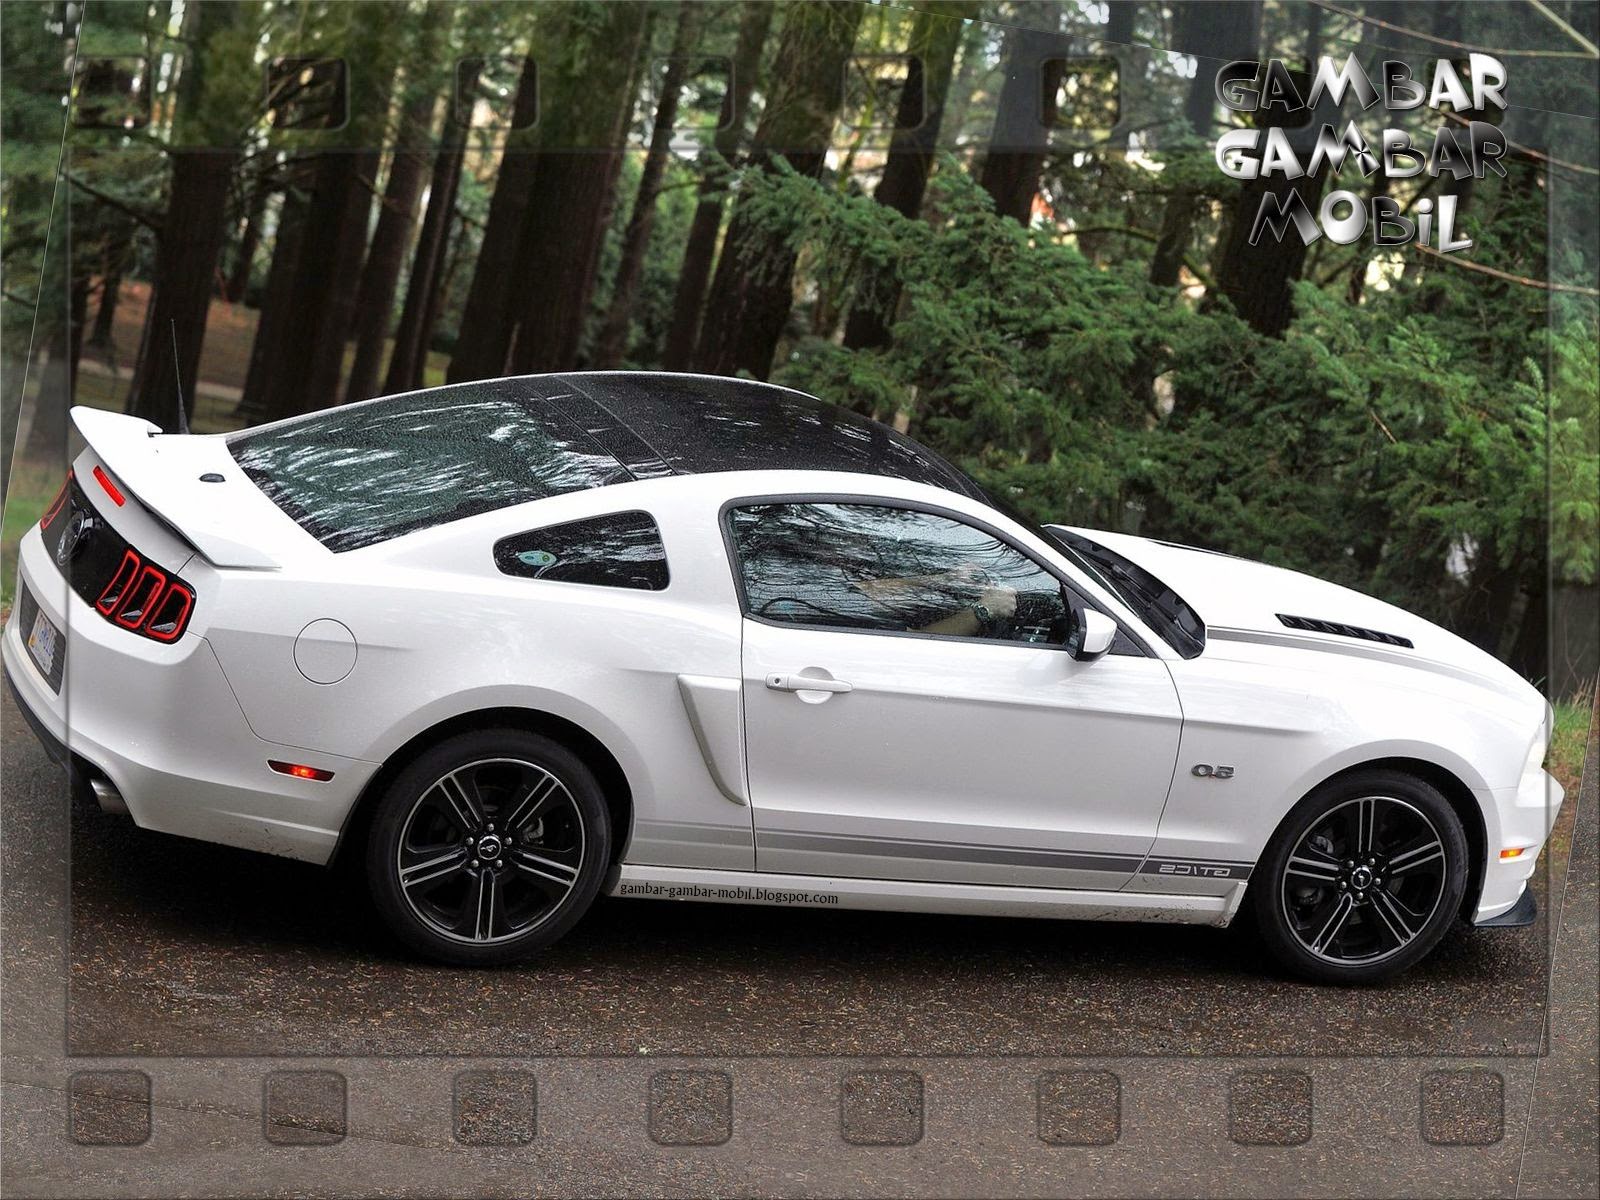 Gambar Ford Mustang Gt Car Autos Gallery